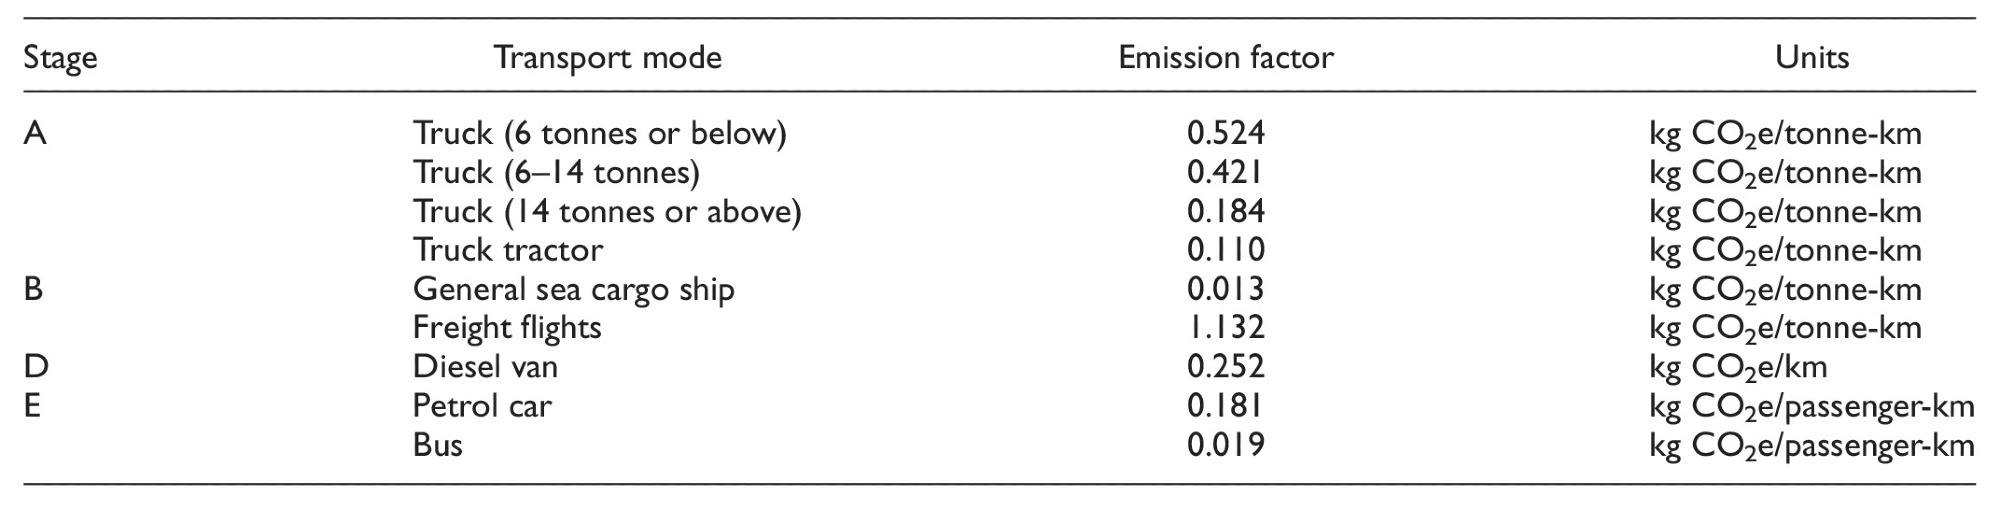 Carbon Emission Factors for Various Transport Modes.